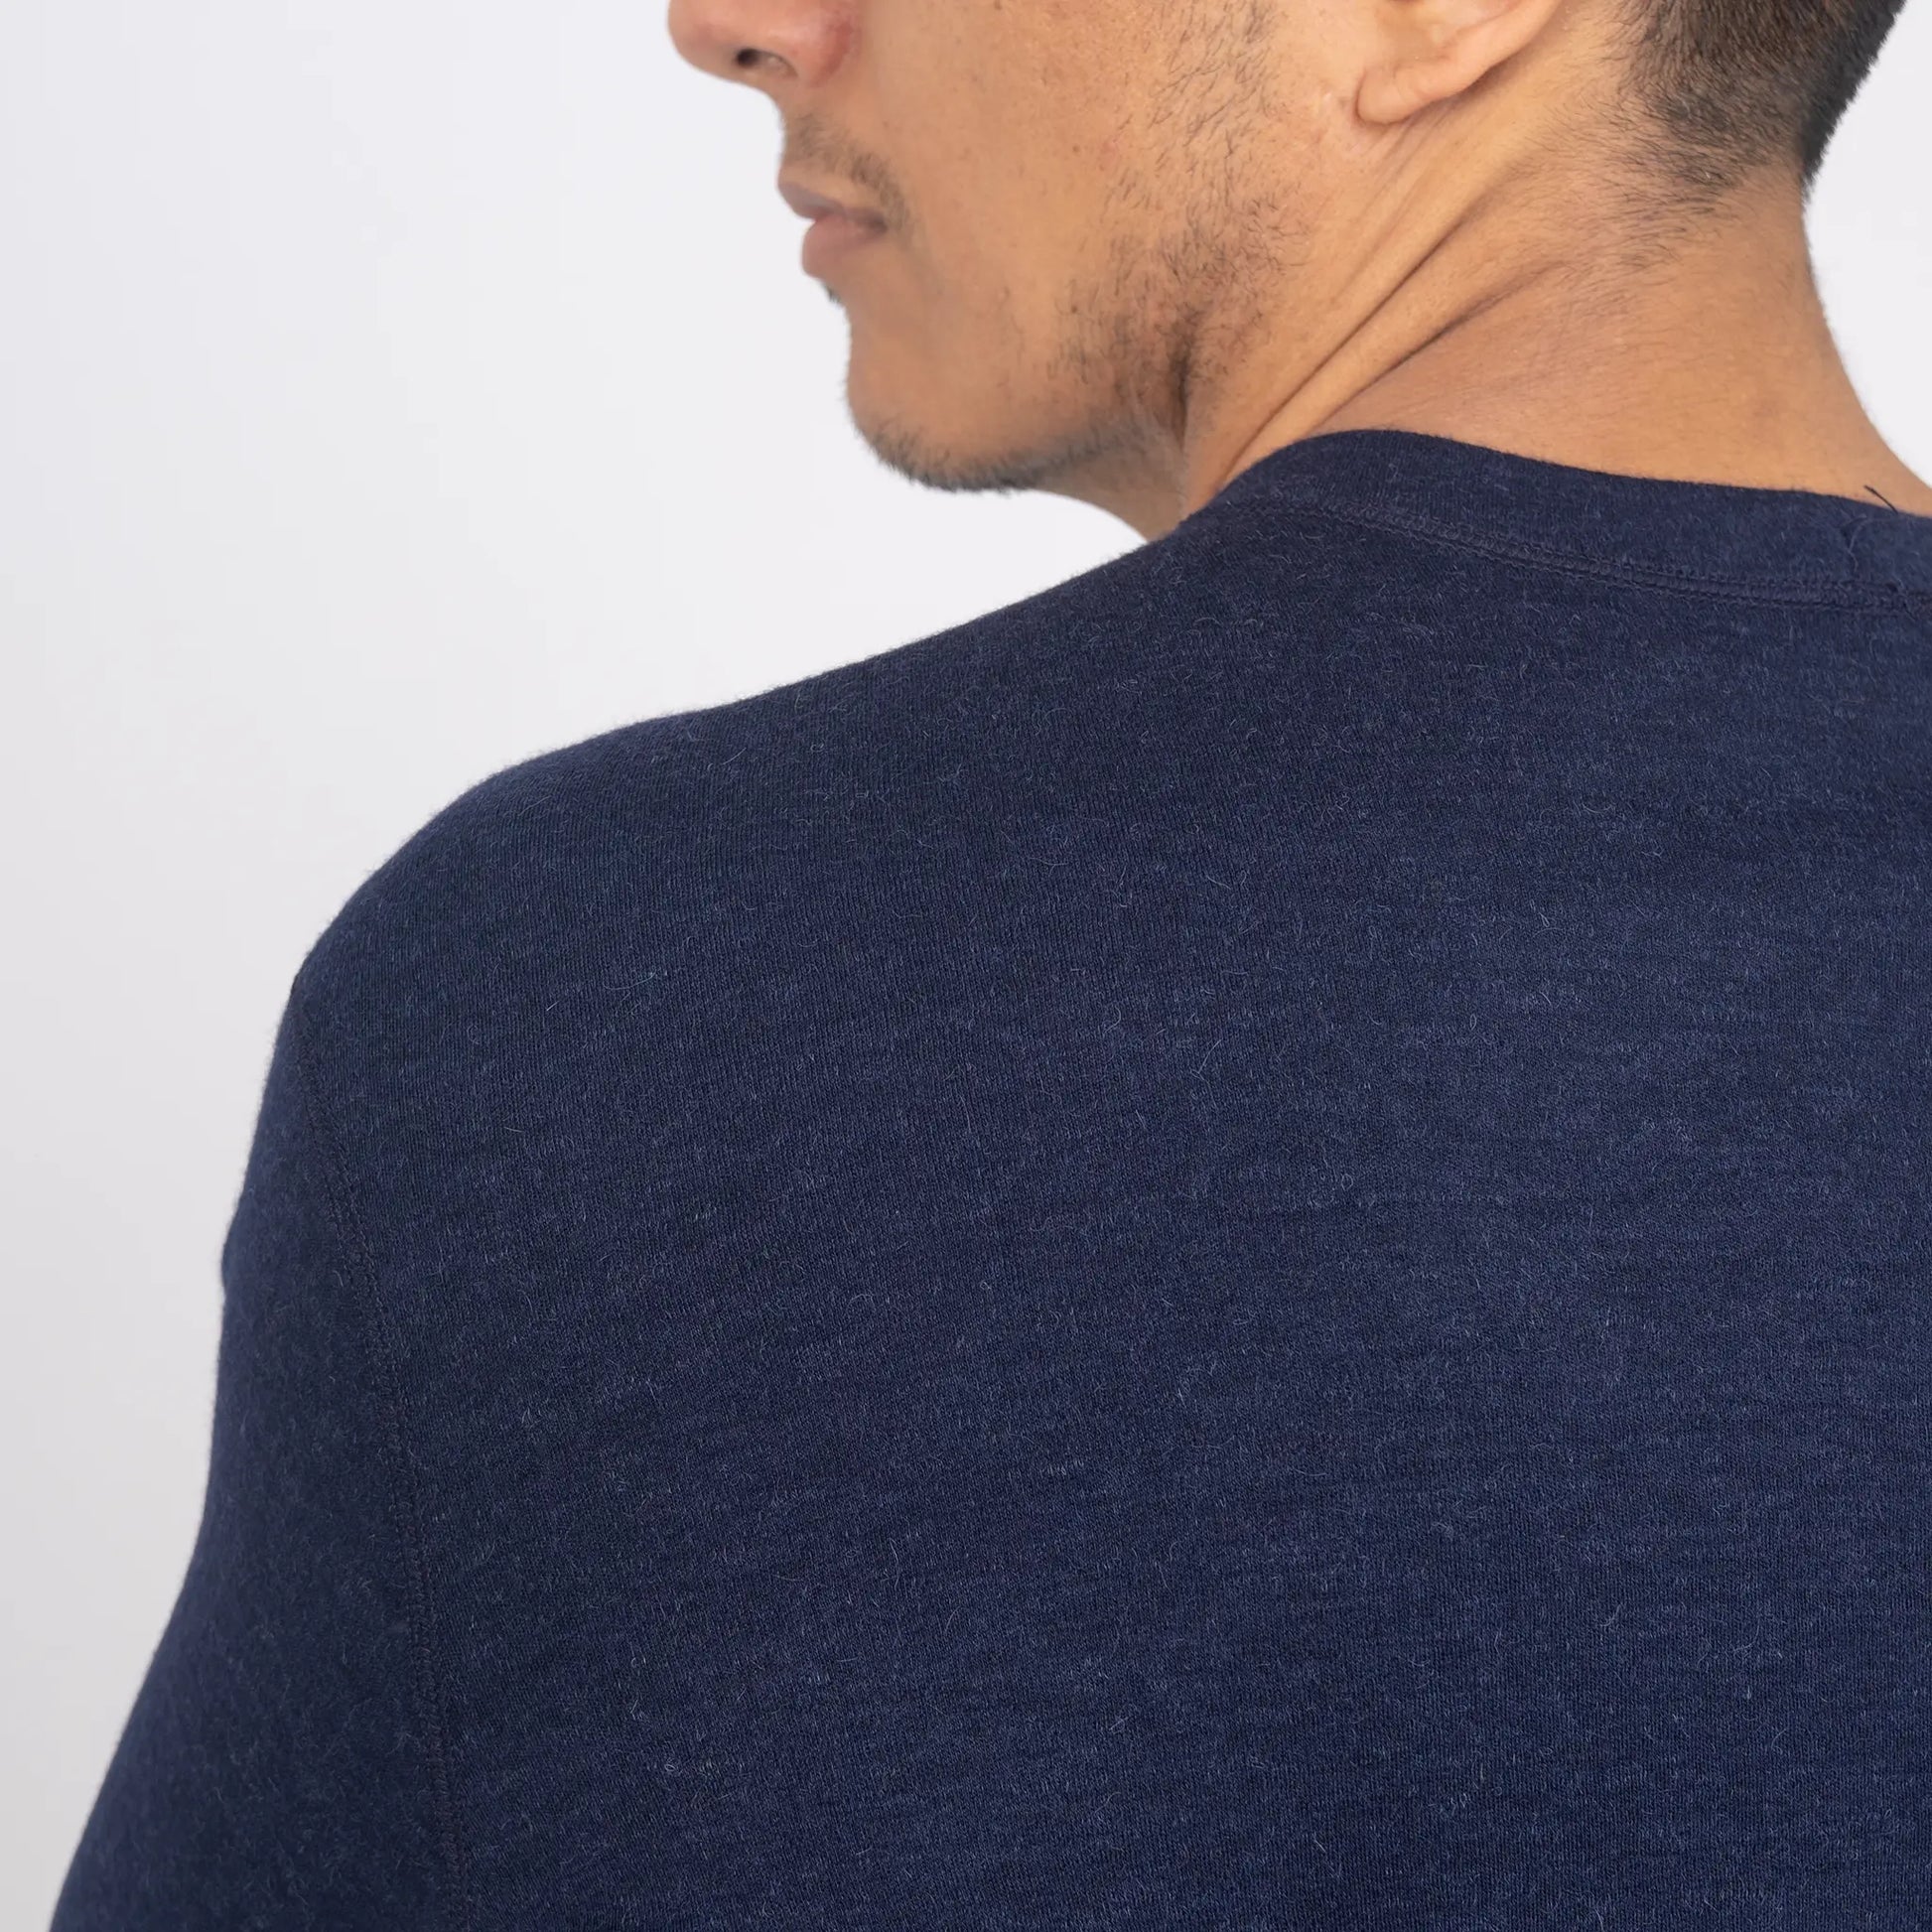 mens alpaca sweater low impact lightweight color navy blue